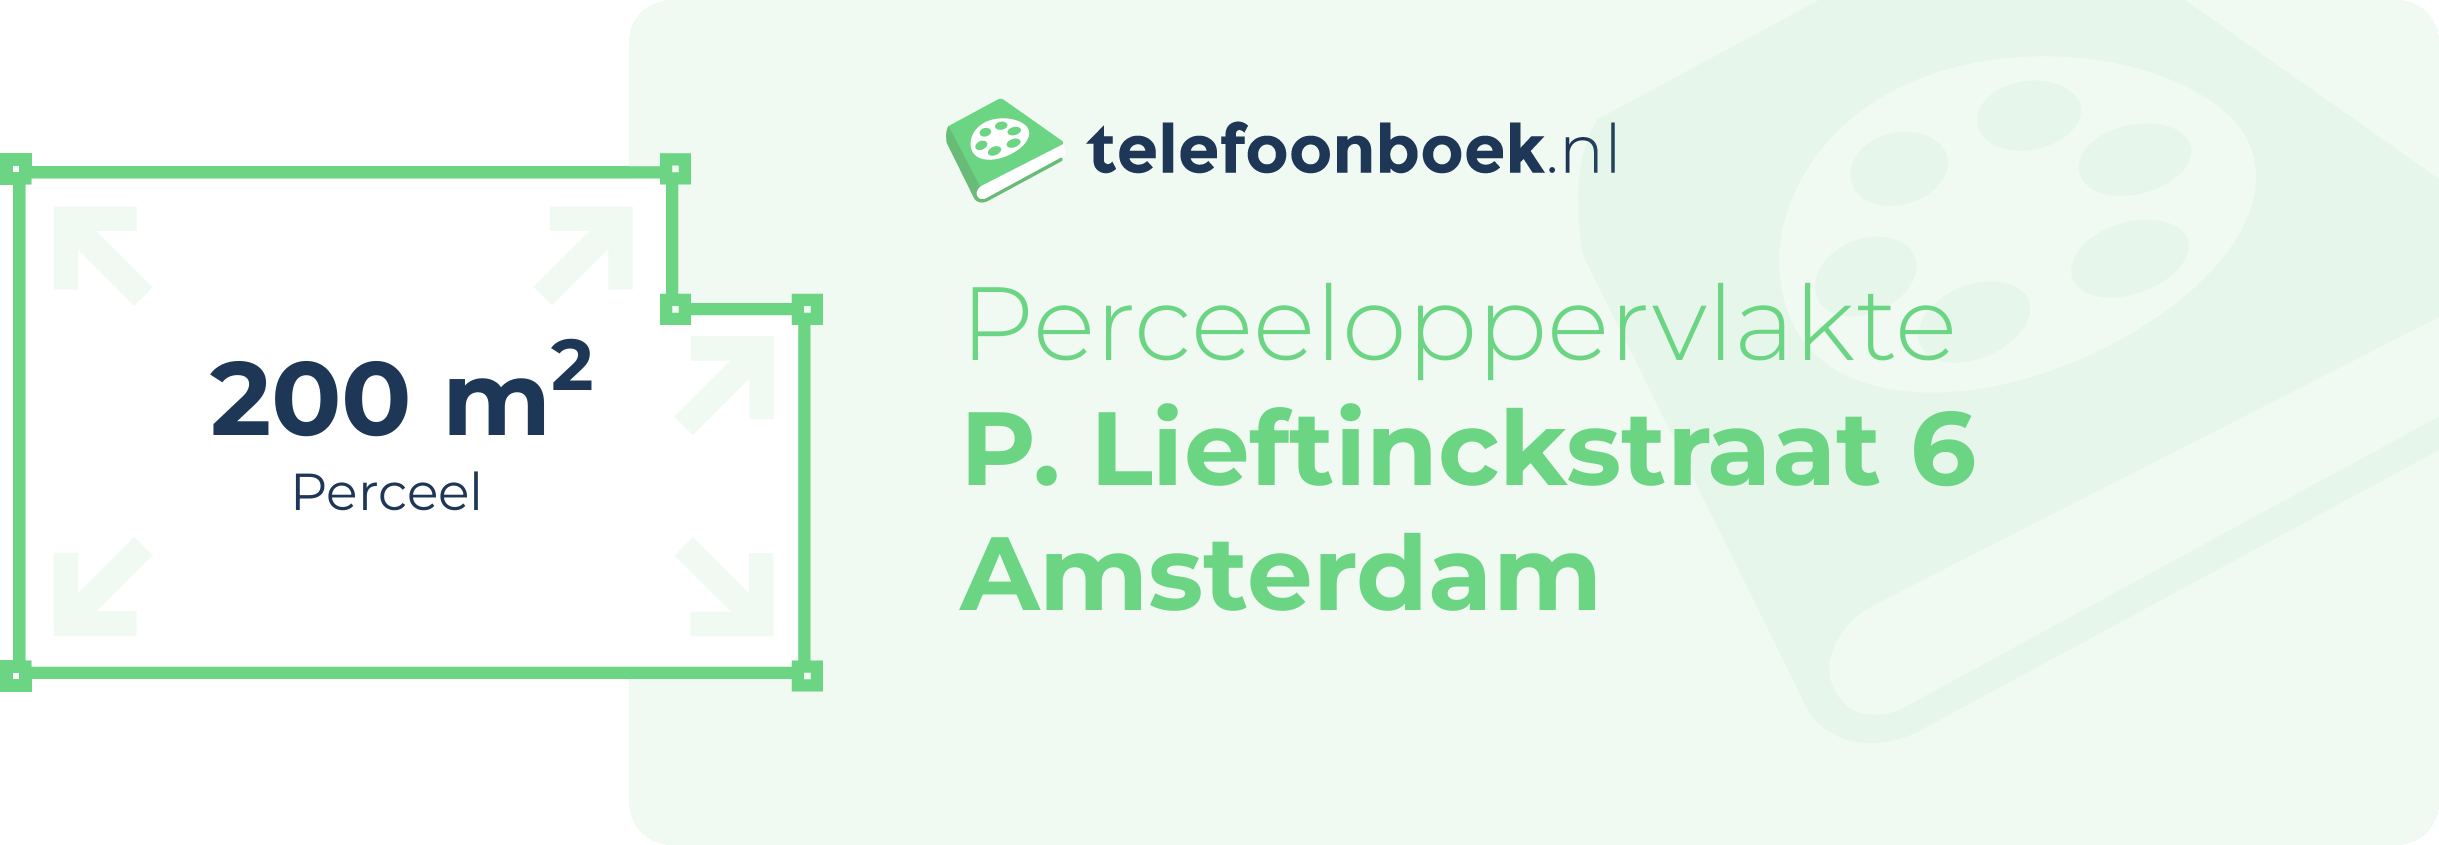 Perceeloppervlakte P. Lieftinckstraat 6 Amsterdam